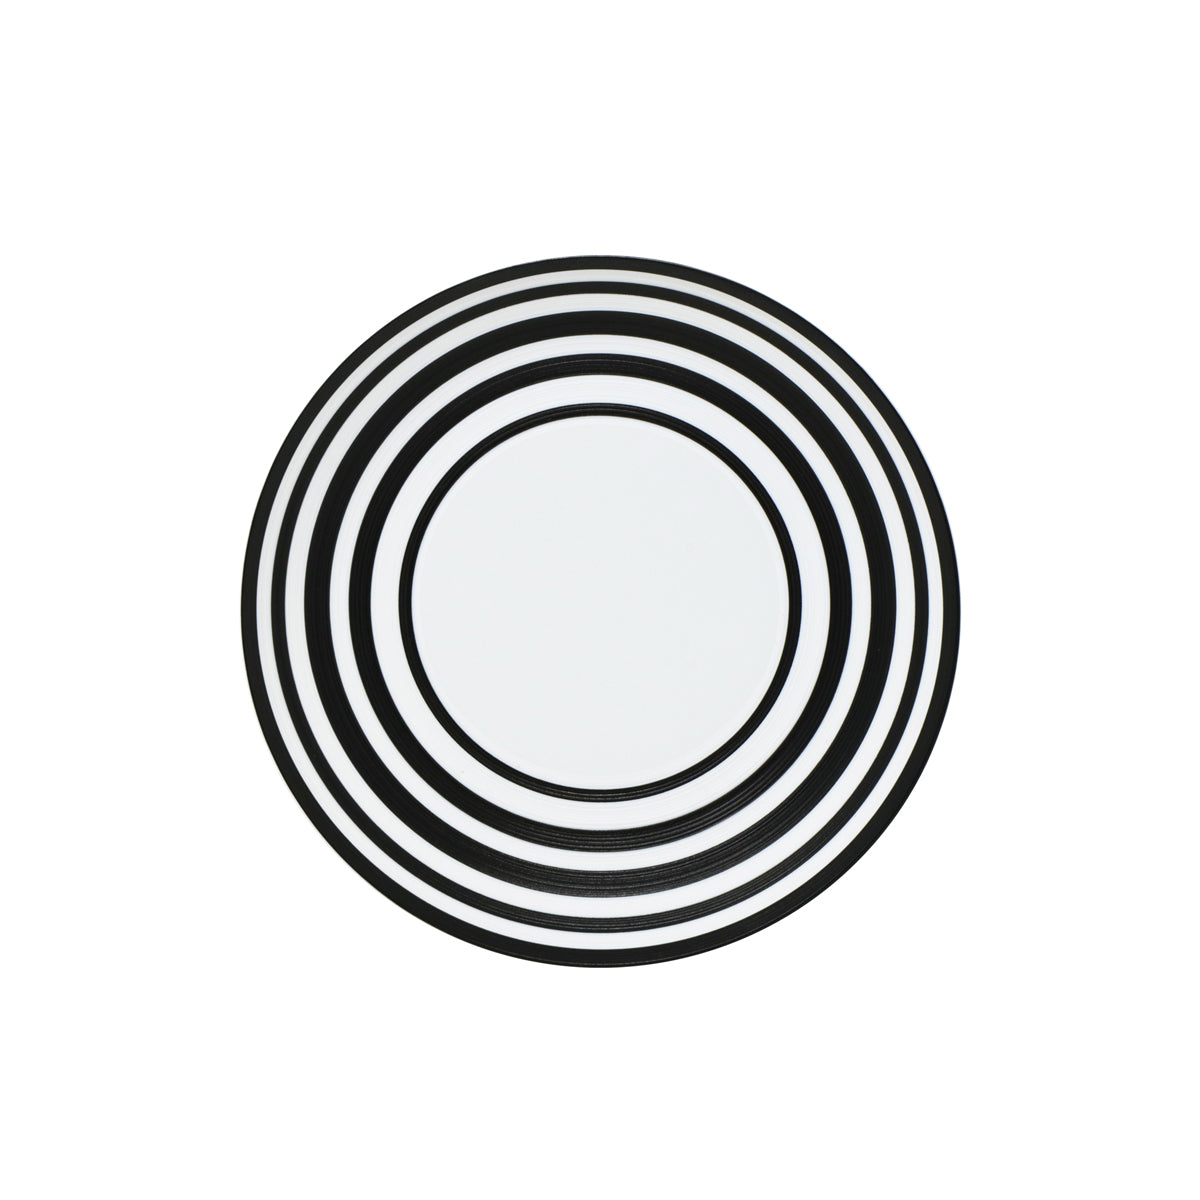 HEMISPHERE Striped Black Bakelite - Pasta plate MM